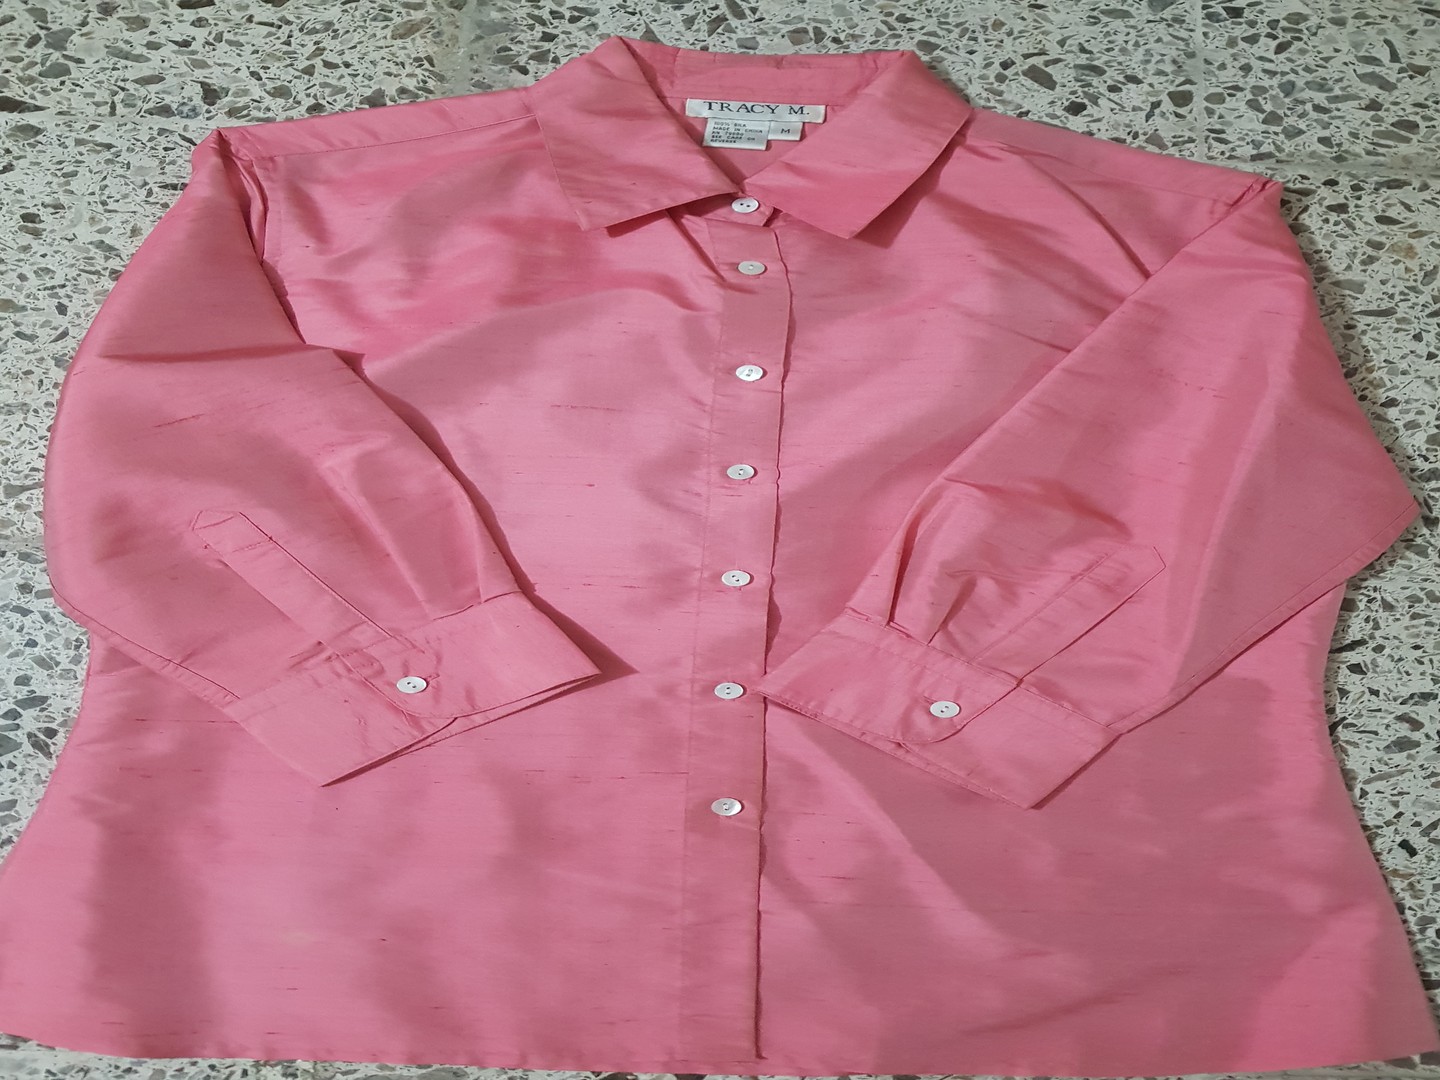 Elegante blusa camisera de seda pura, tamaño M, marca Tracy M. 3